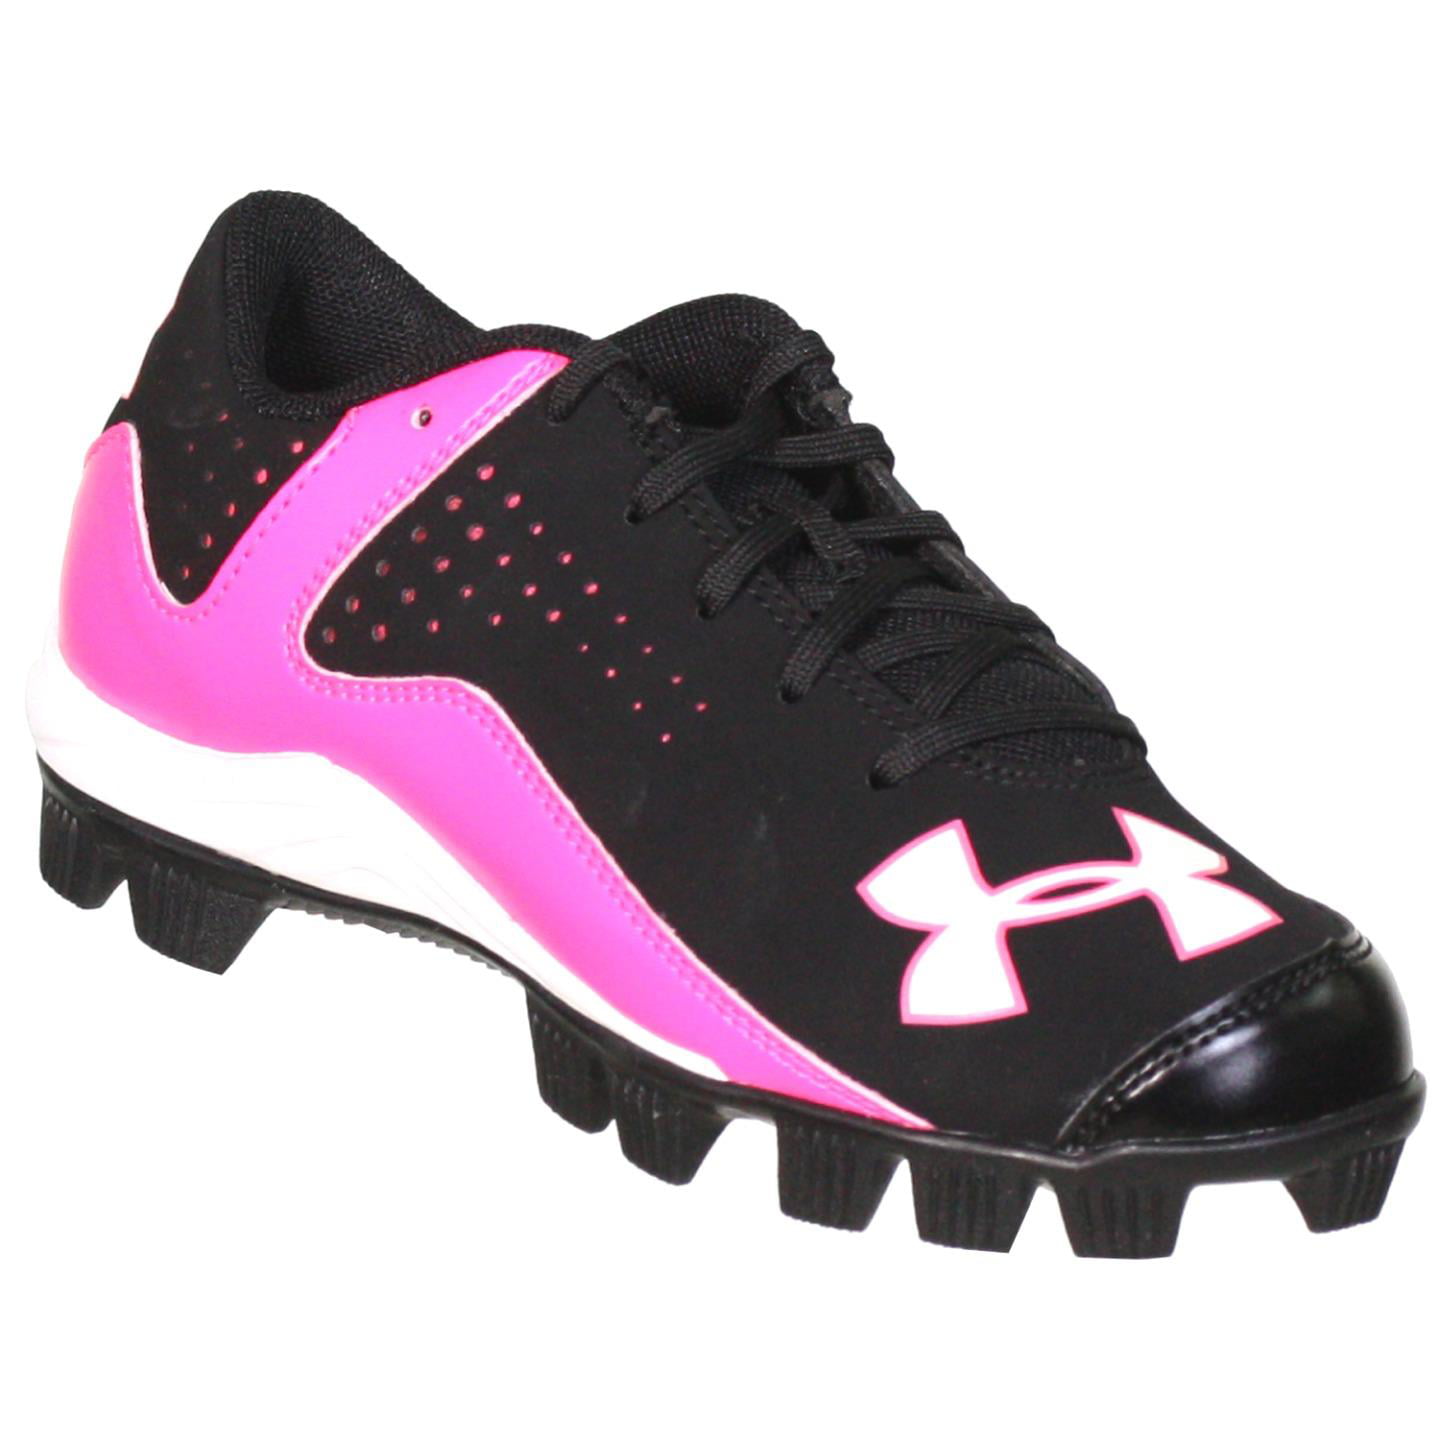 NEW Pre School Girls UNDER ARMOUR UA Leadoff Low Baseball Softball Cleats Shoes 